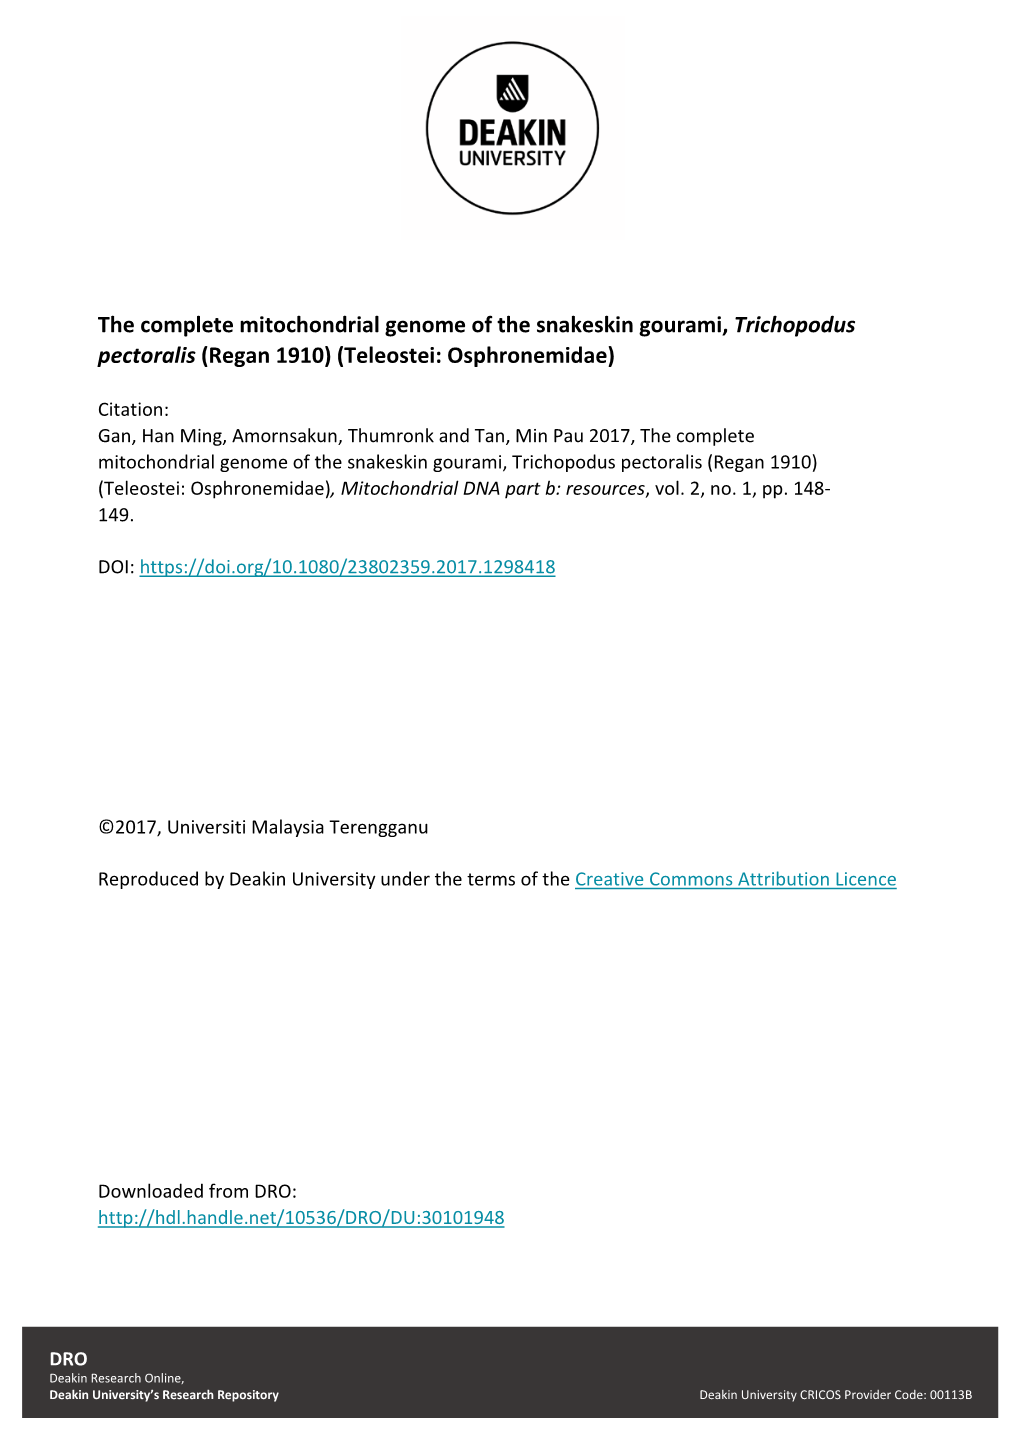 The Complete Mitochondrial Genome of the Snakeskin Gourami, Trichopodus Pectoralis (Regan 1910) (Teleostei: Osphronemidae)